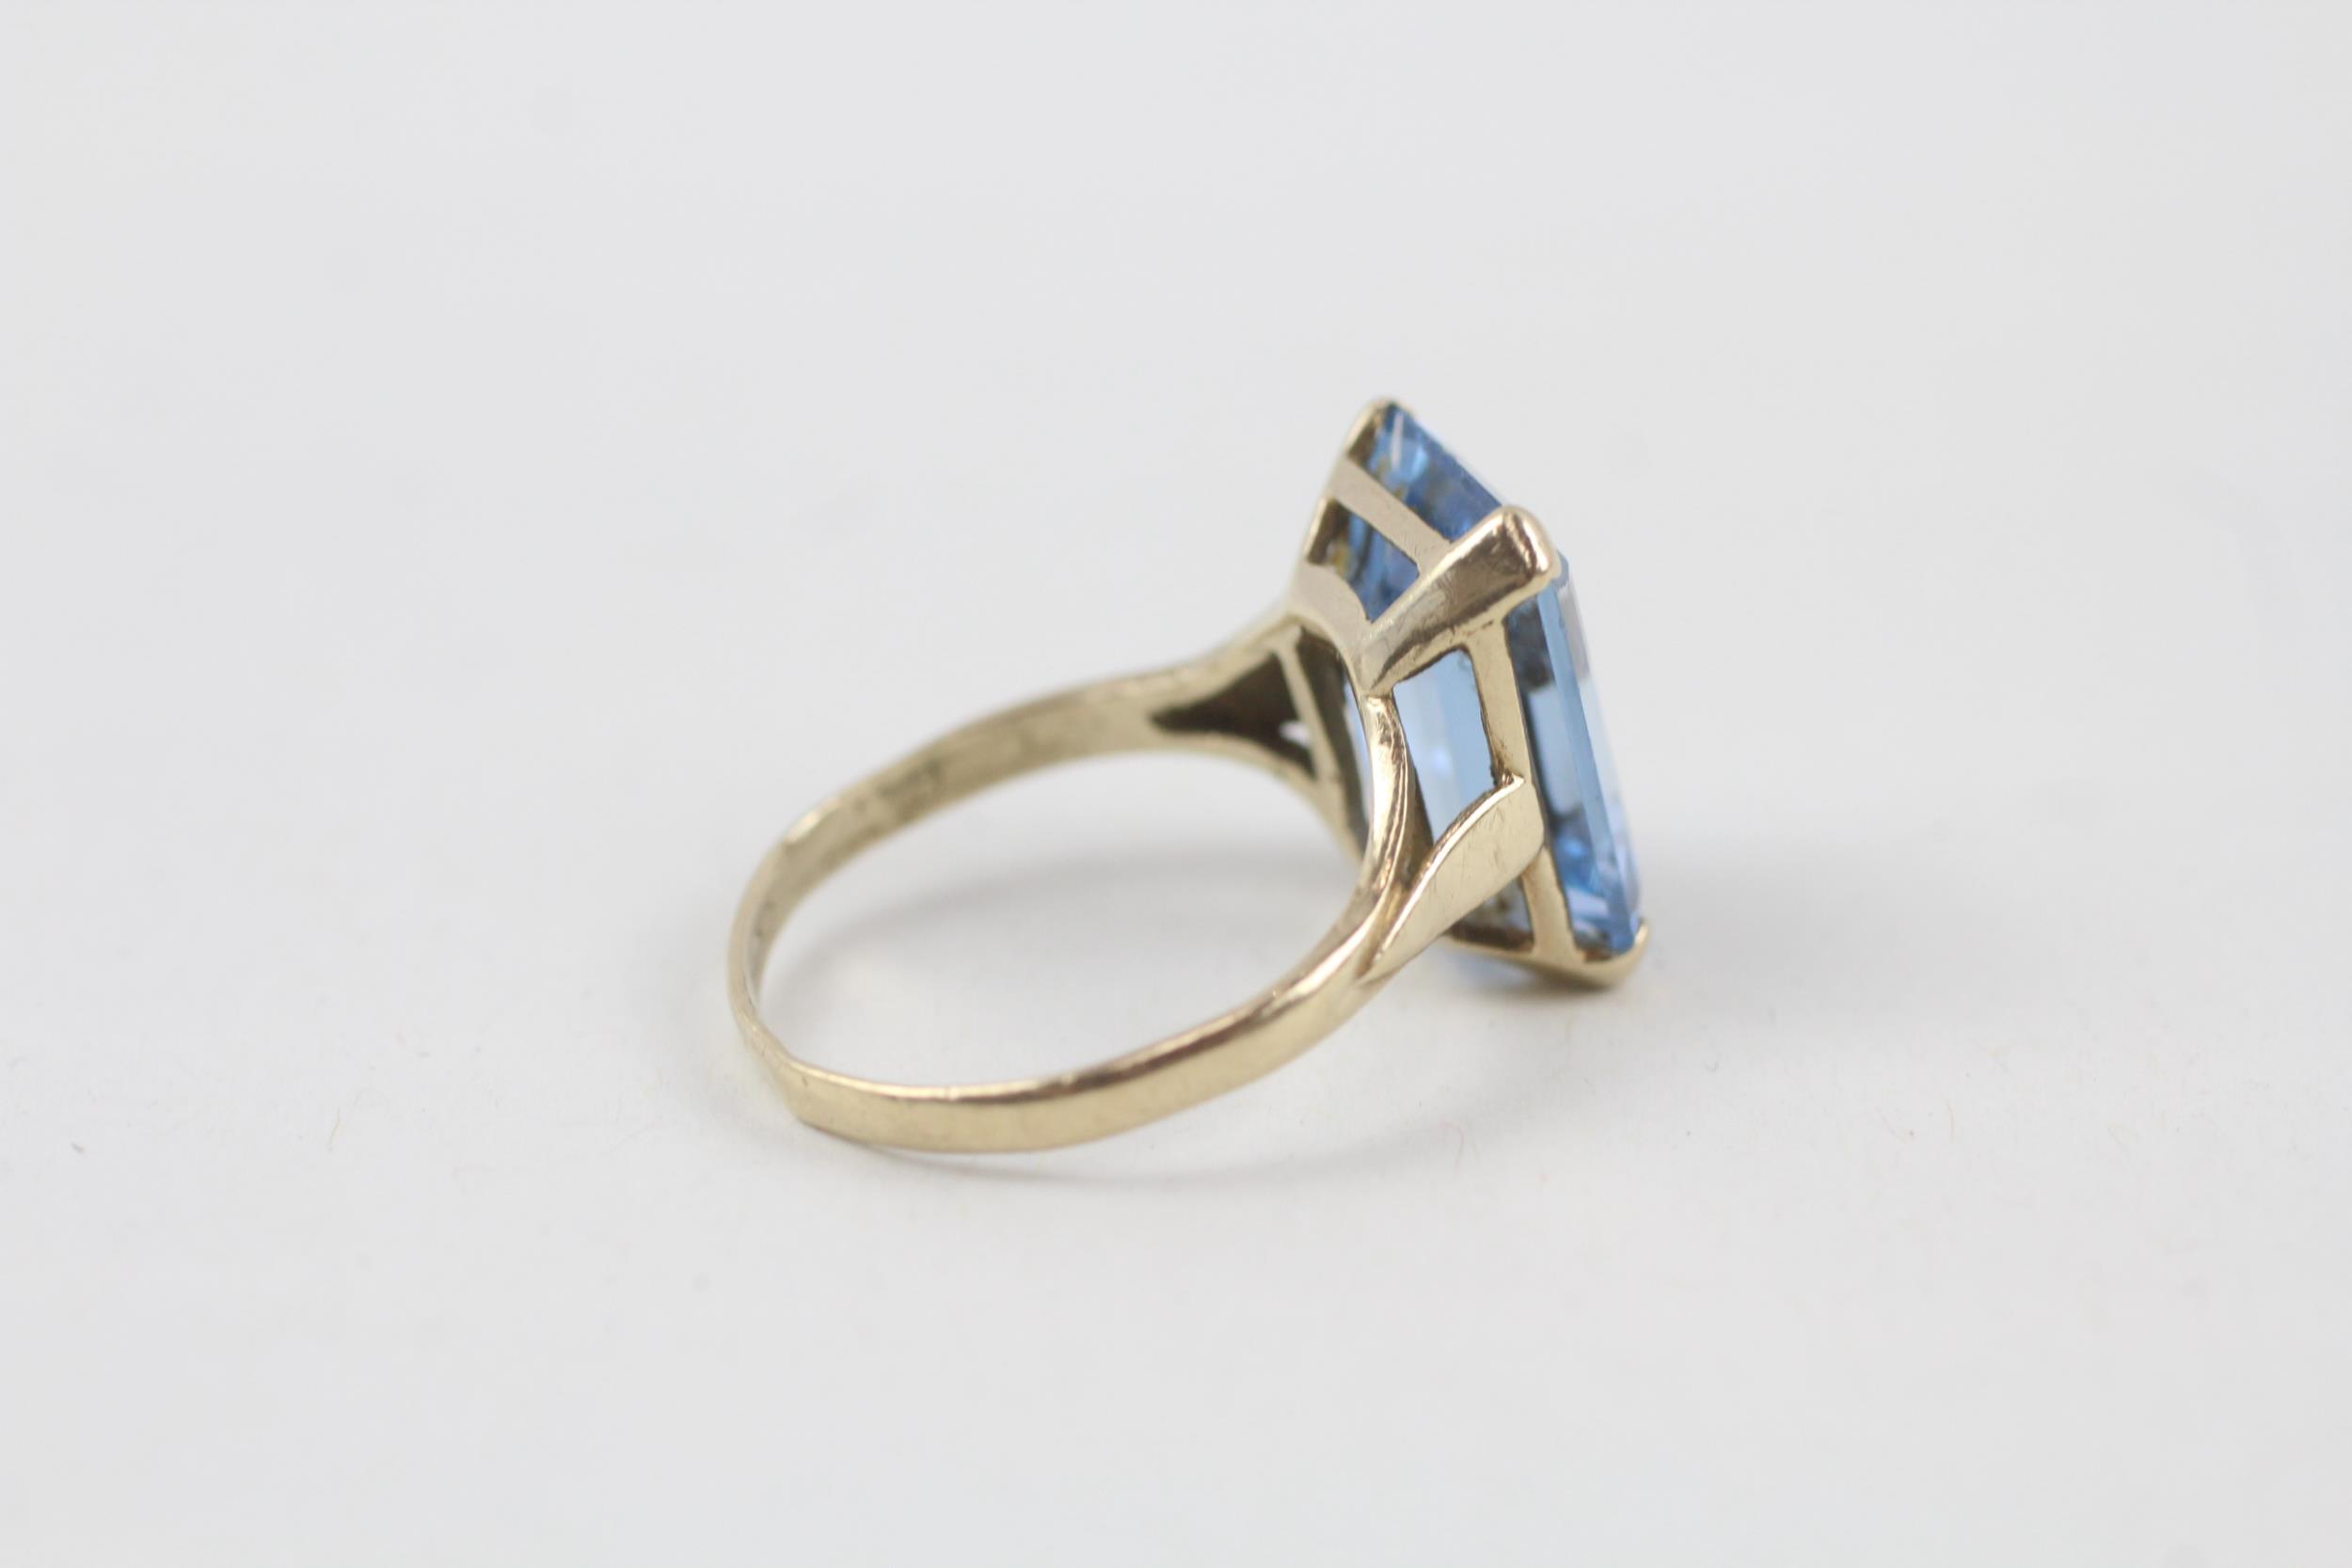 9ct gold emerald cut blue gemstone dress ring Size L 1/2 - 3.2 g - Image 5 of 5